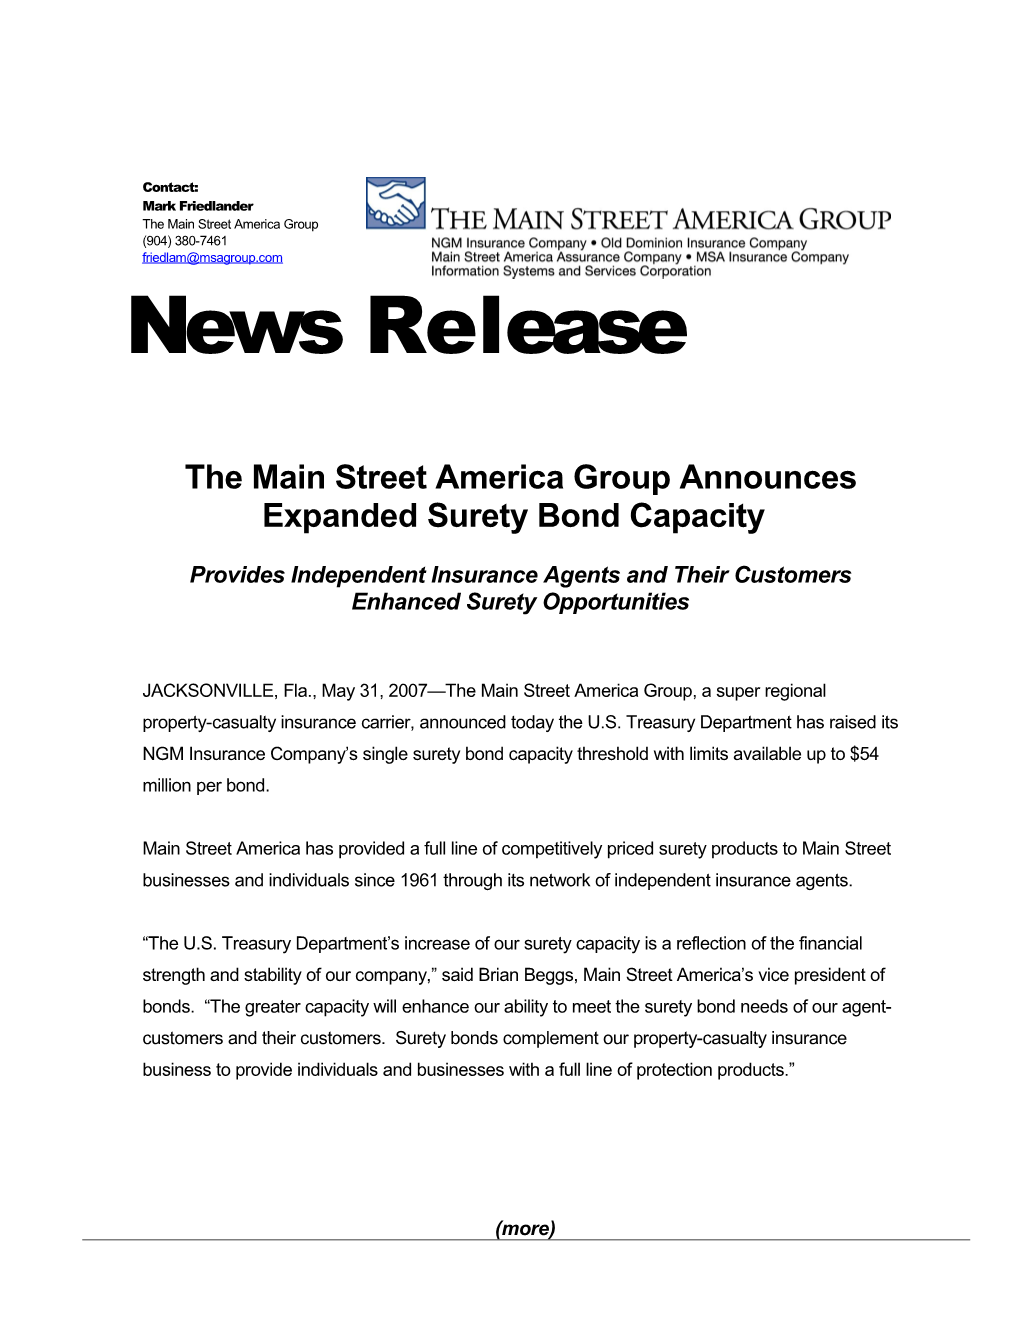 The Main Street America Group Announces